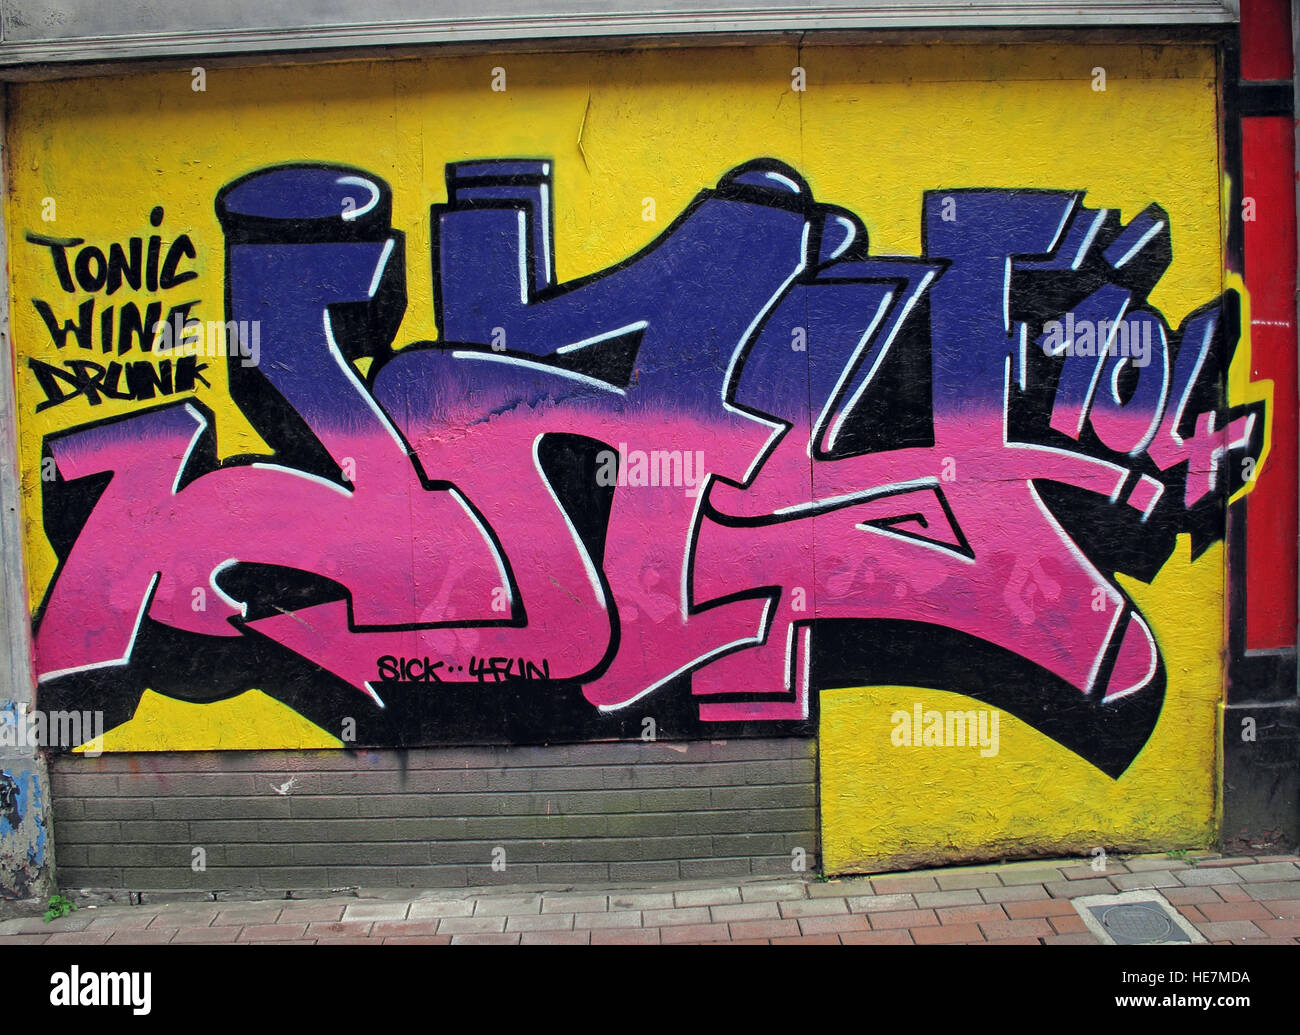 Tonic Wine Drunk, Graffiti art, Belfast city Garfield St, City Centre, Northern Ireland, UK Stock Photo